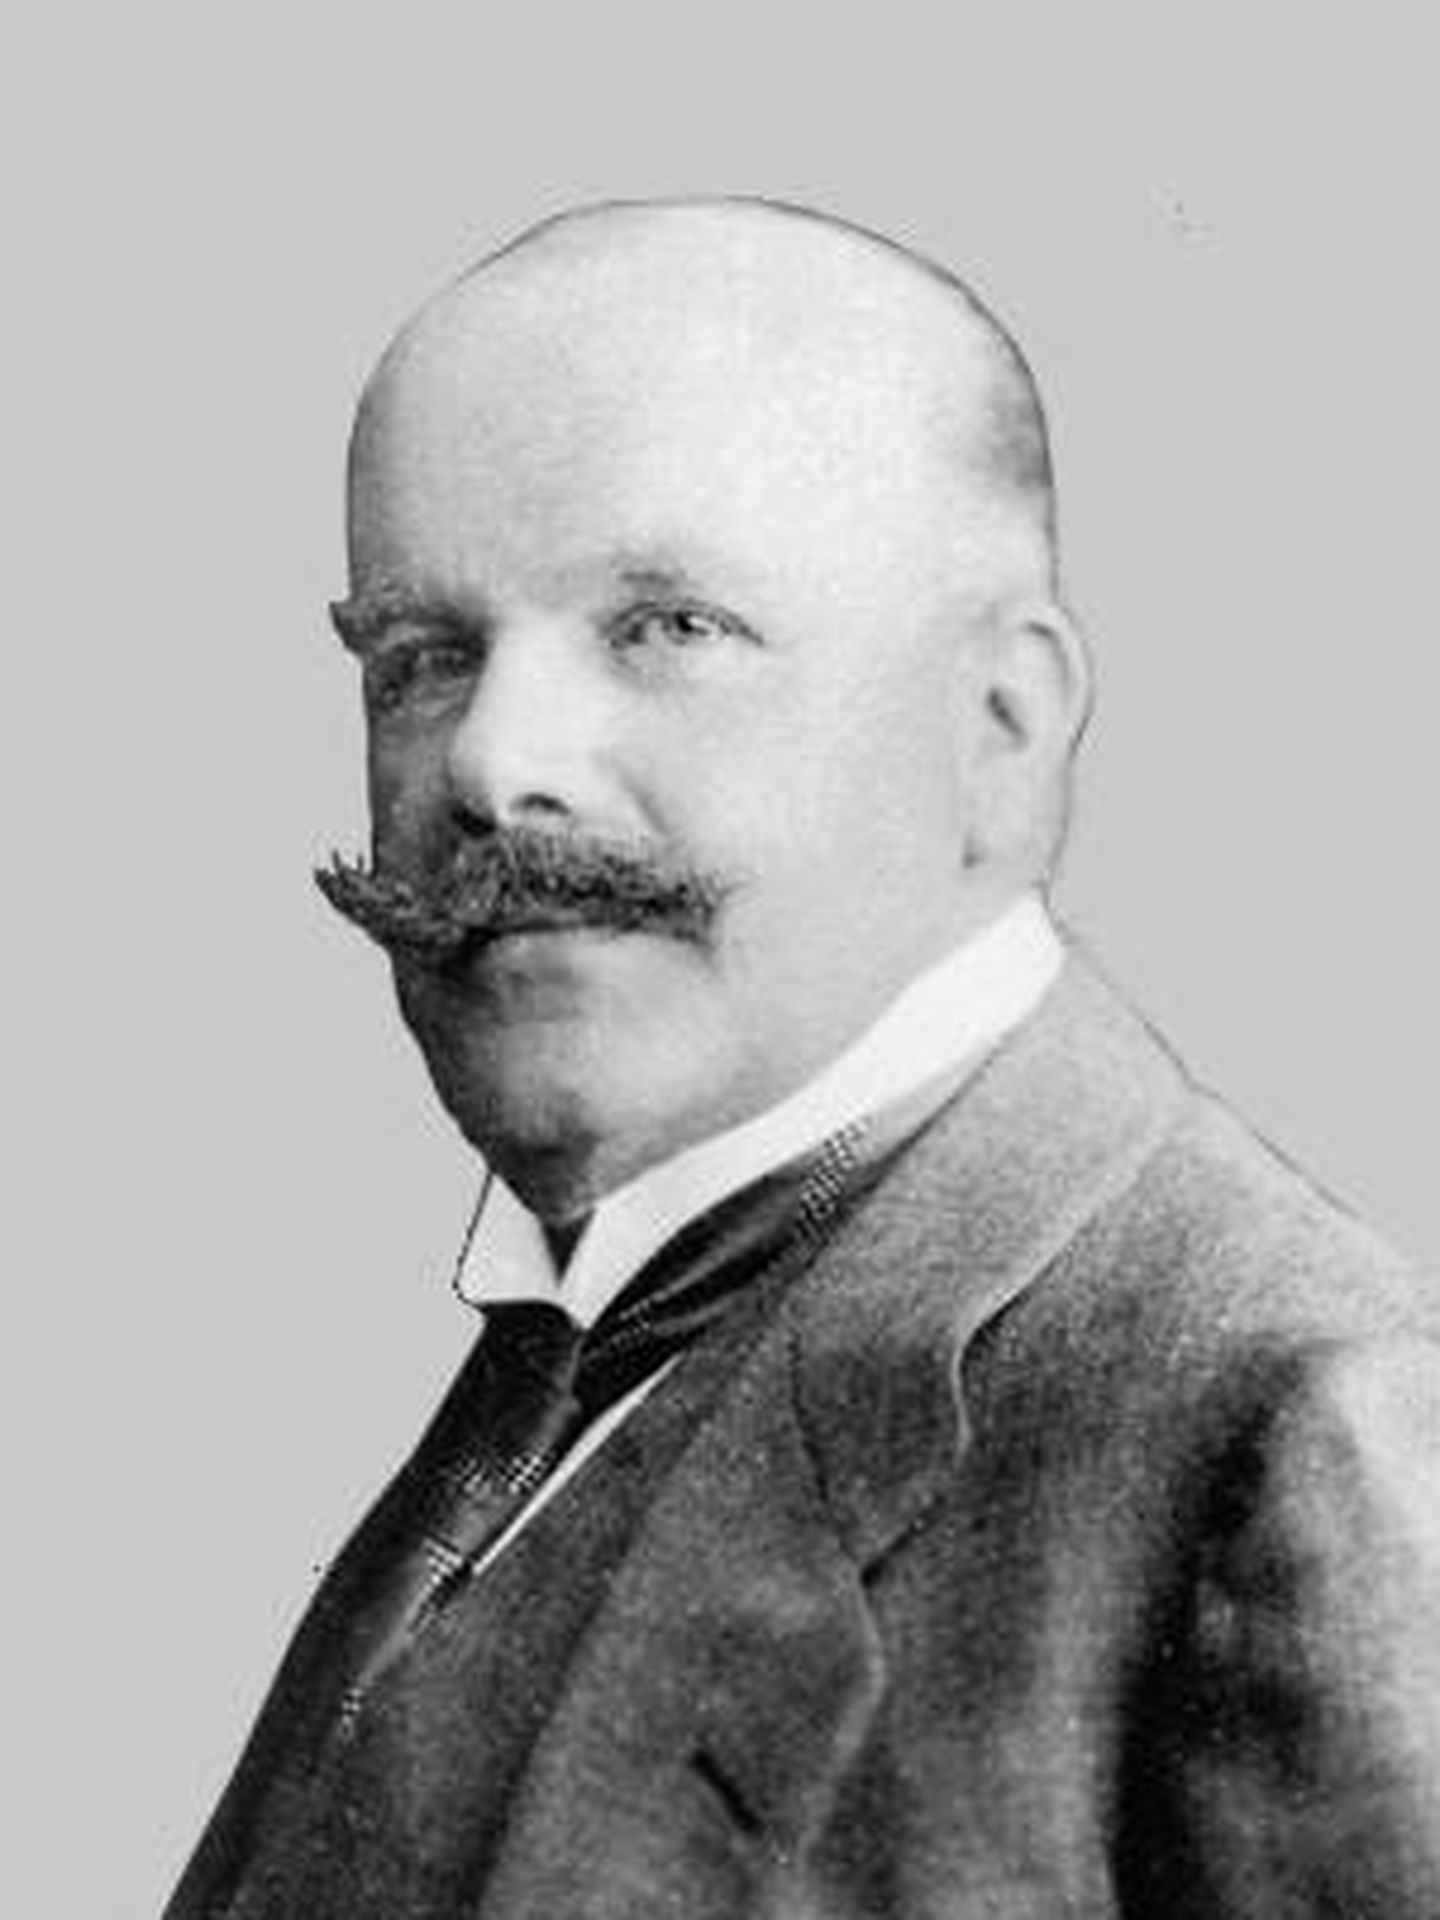 Albert Boehringer, farmaceútico. (Wikidata)